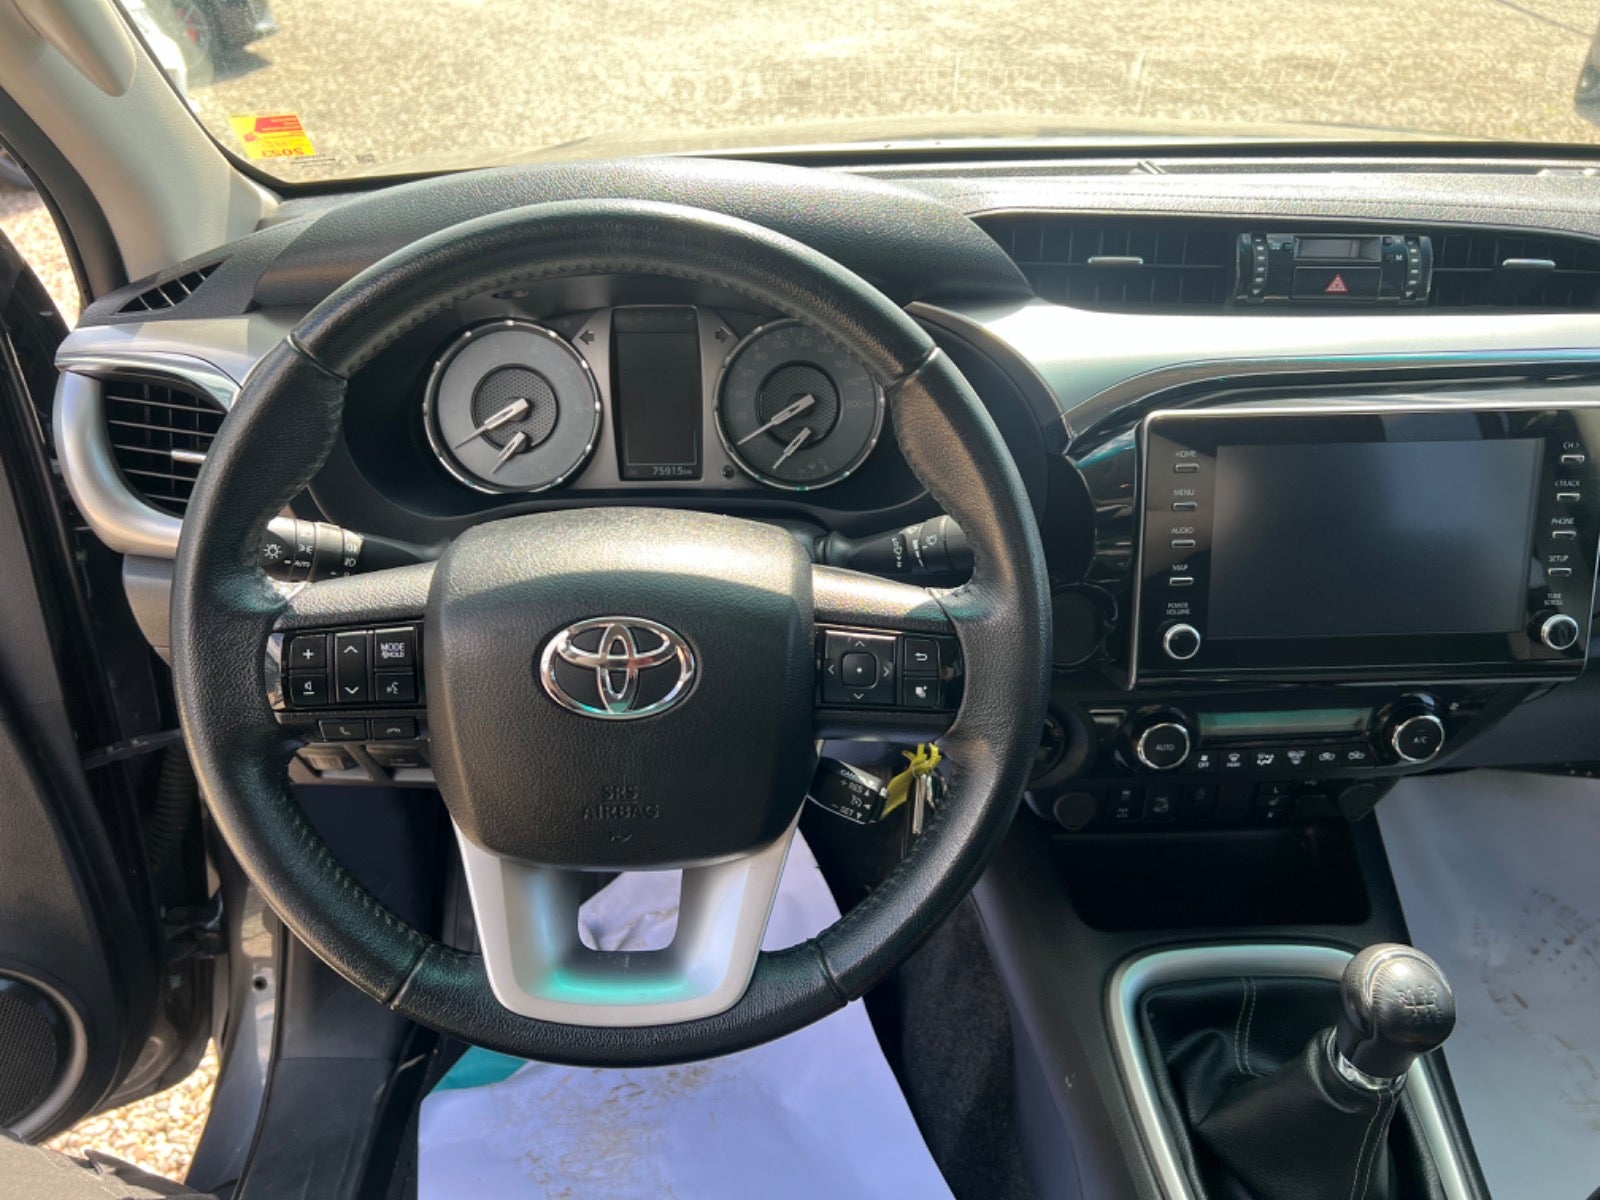 Toyota HiLux 2021